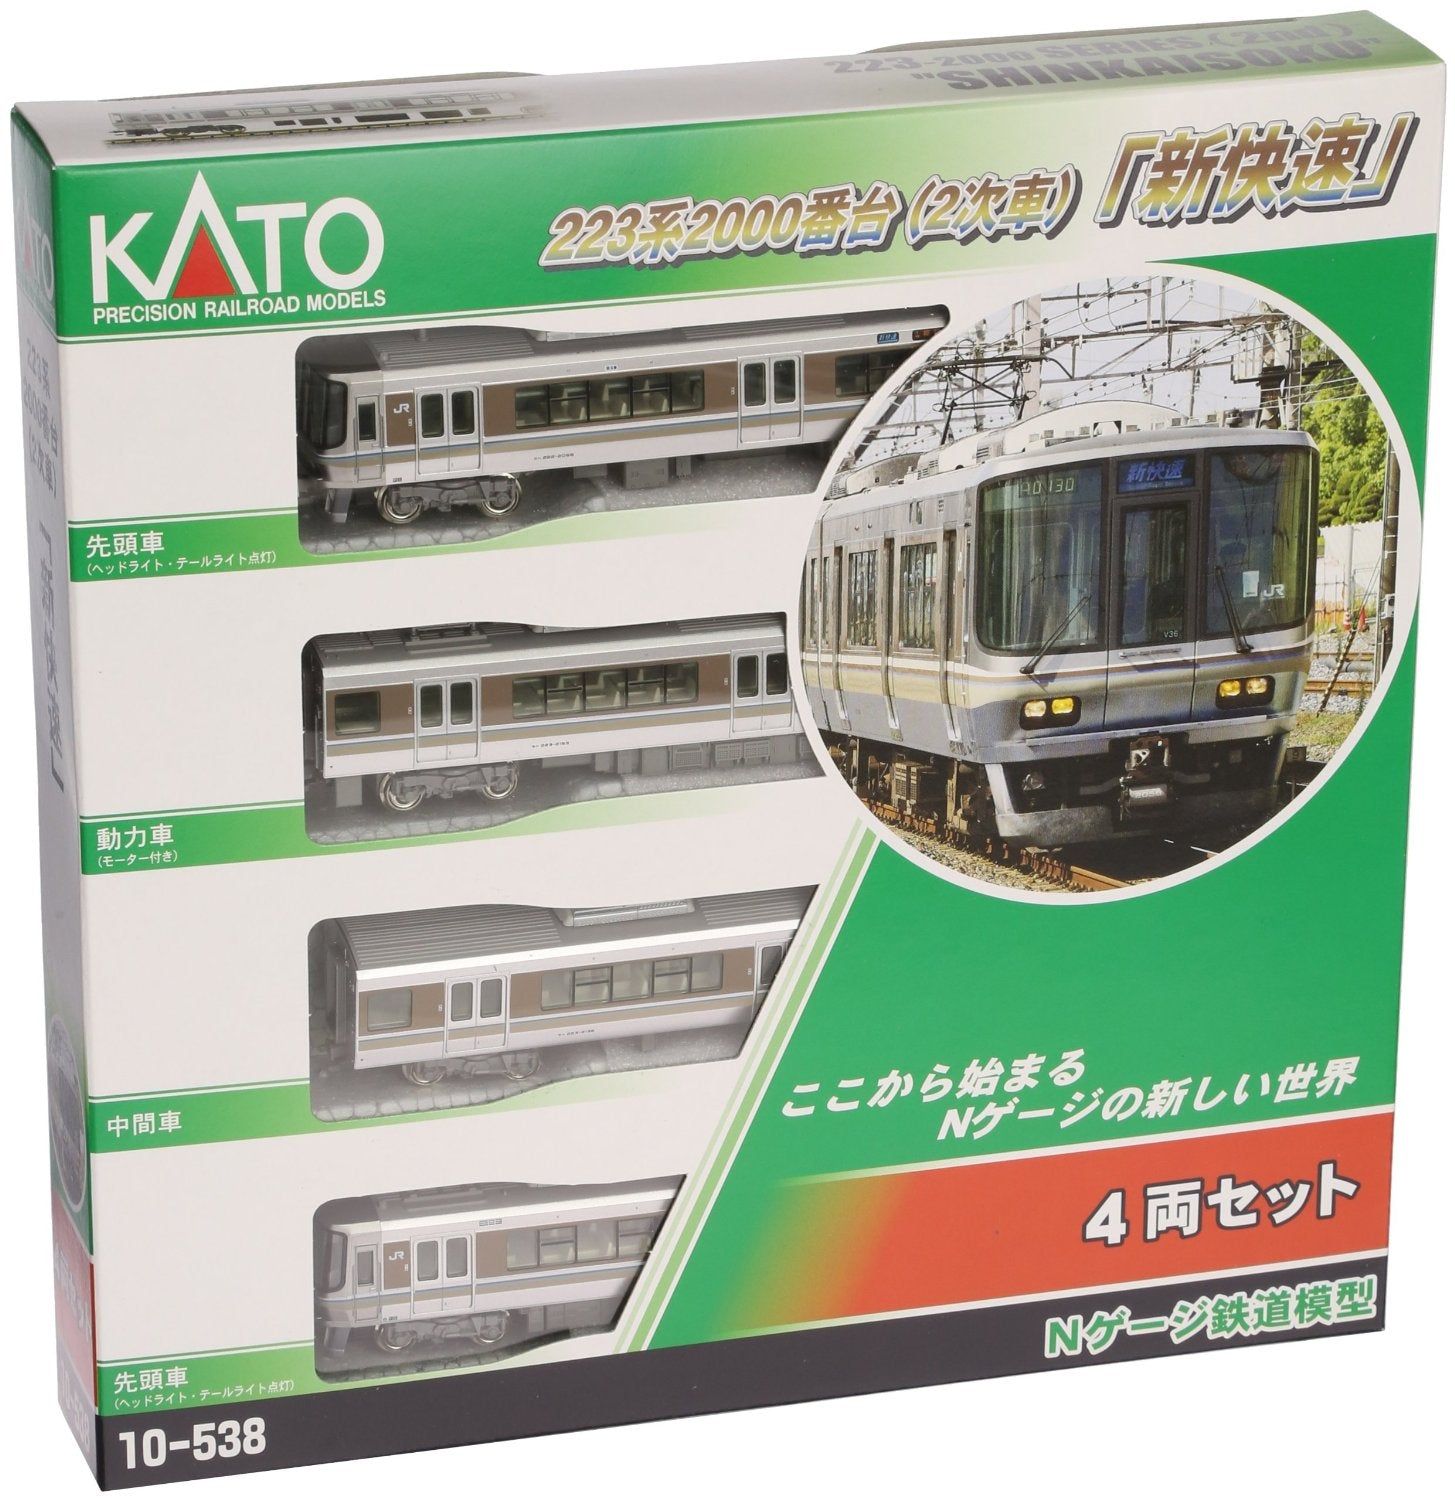 KATO 10-538 Series 223-2000 2nd Edition Shin-kaisoku New Rapid - BanzaiHobby